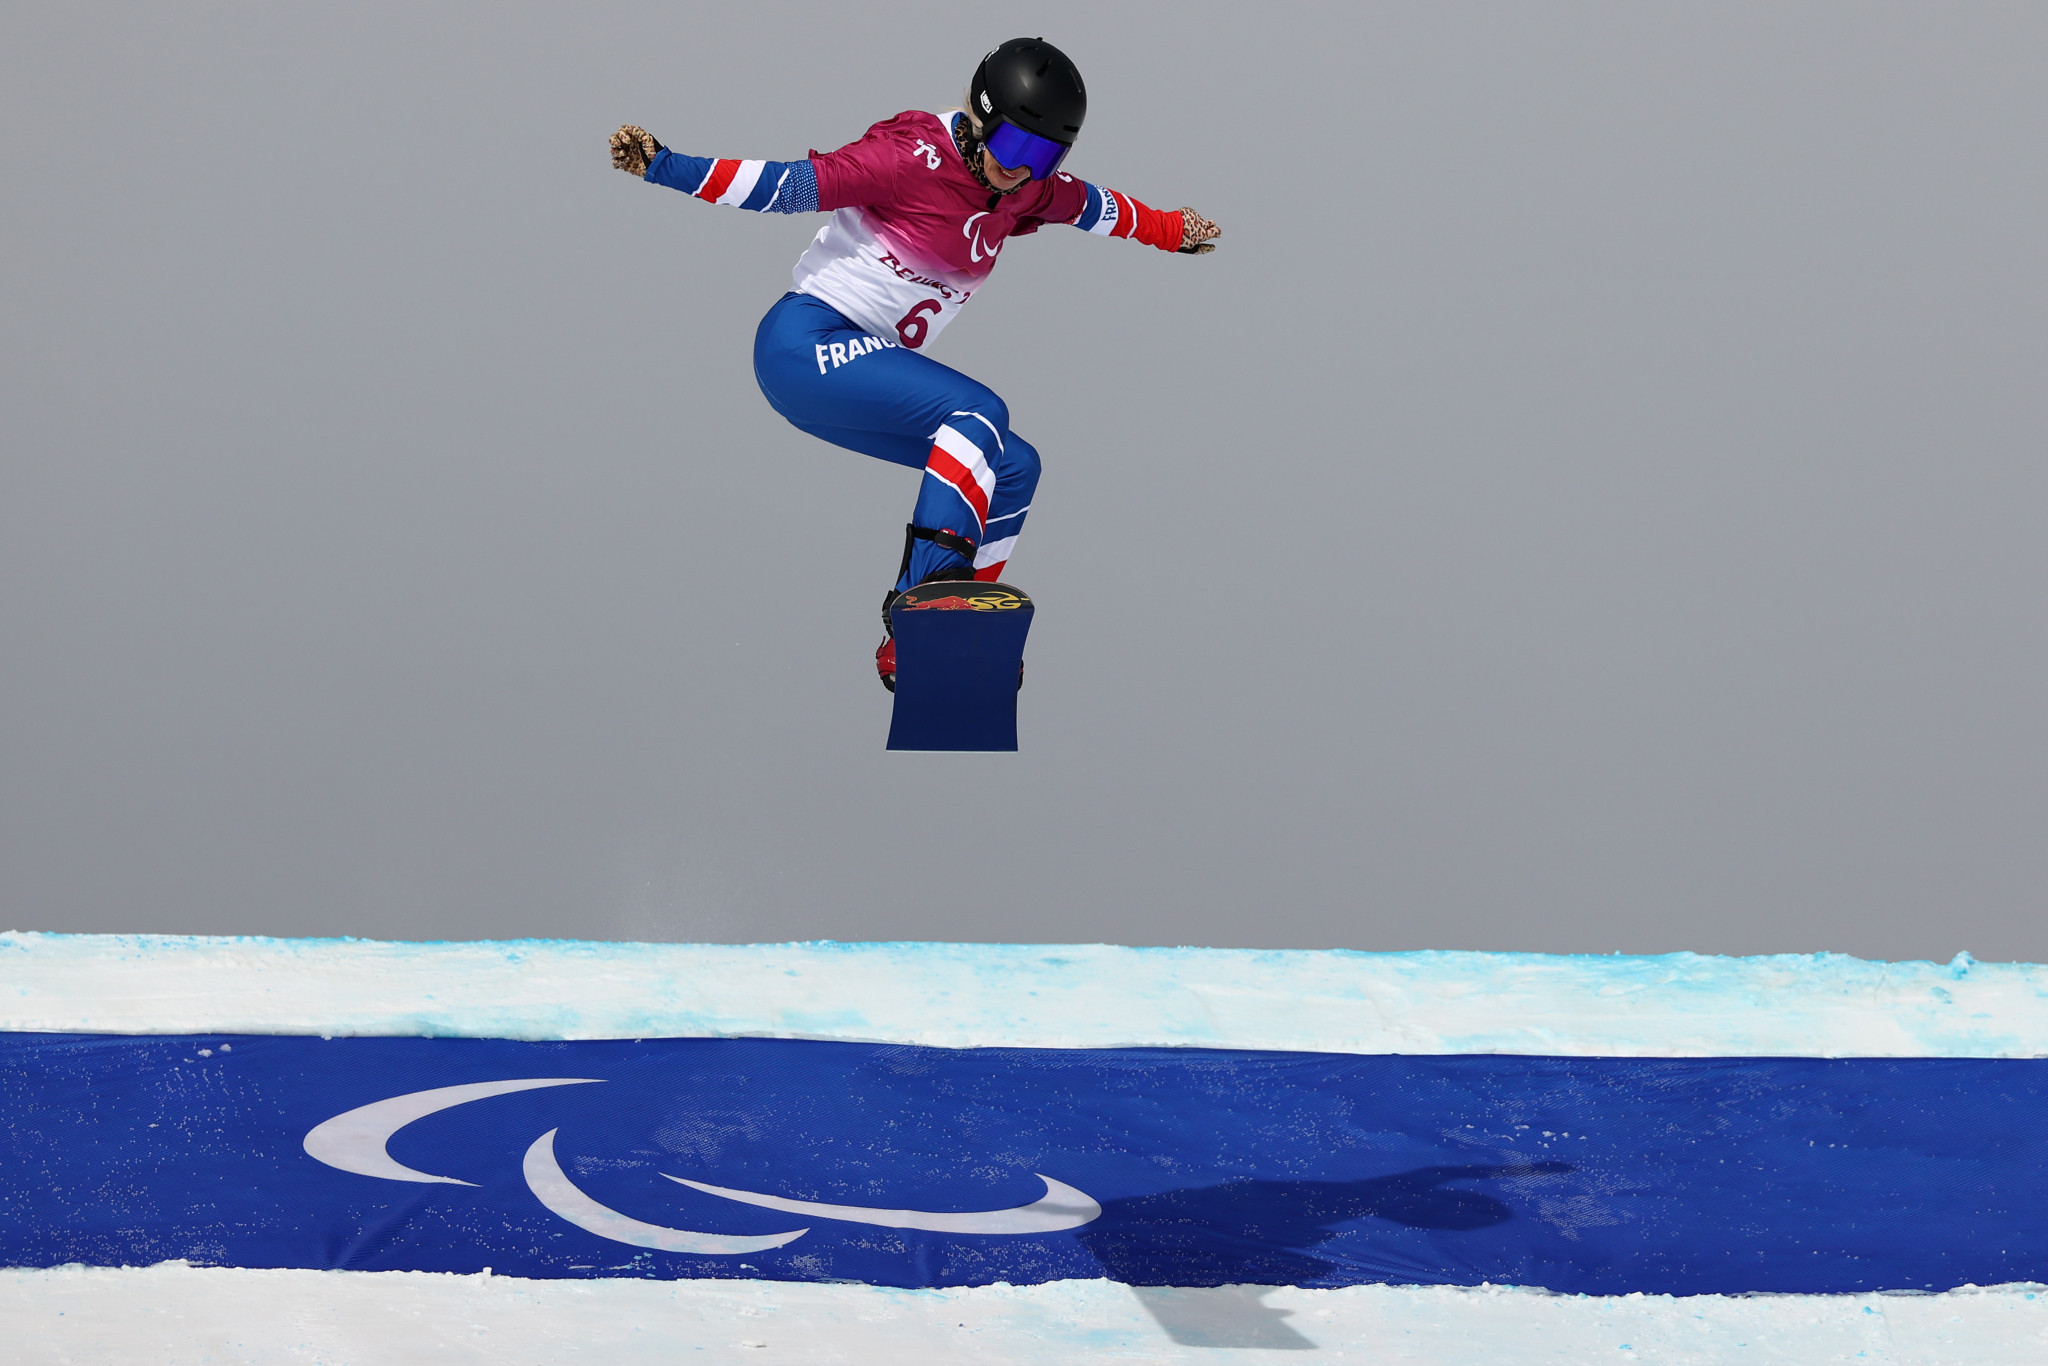 Hernandez and Huckaby lead women's SB-LL2 snowboard cross qualifying at Beijing 2022